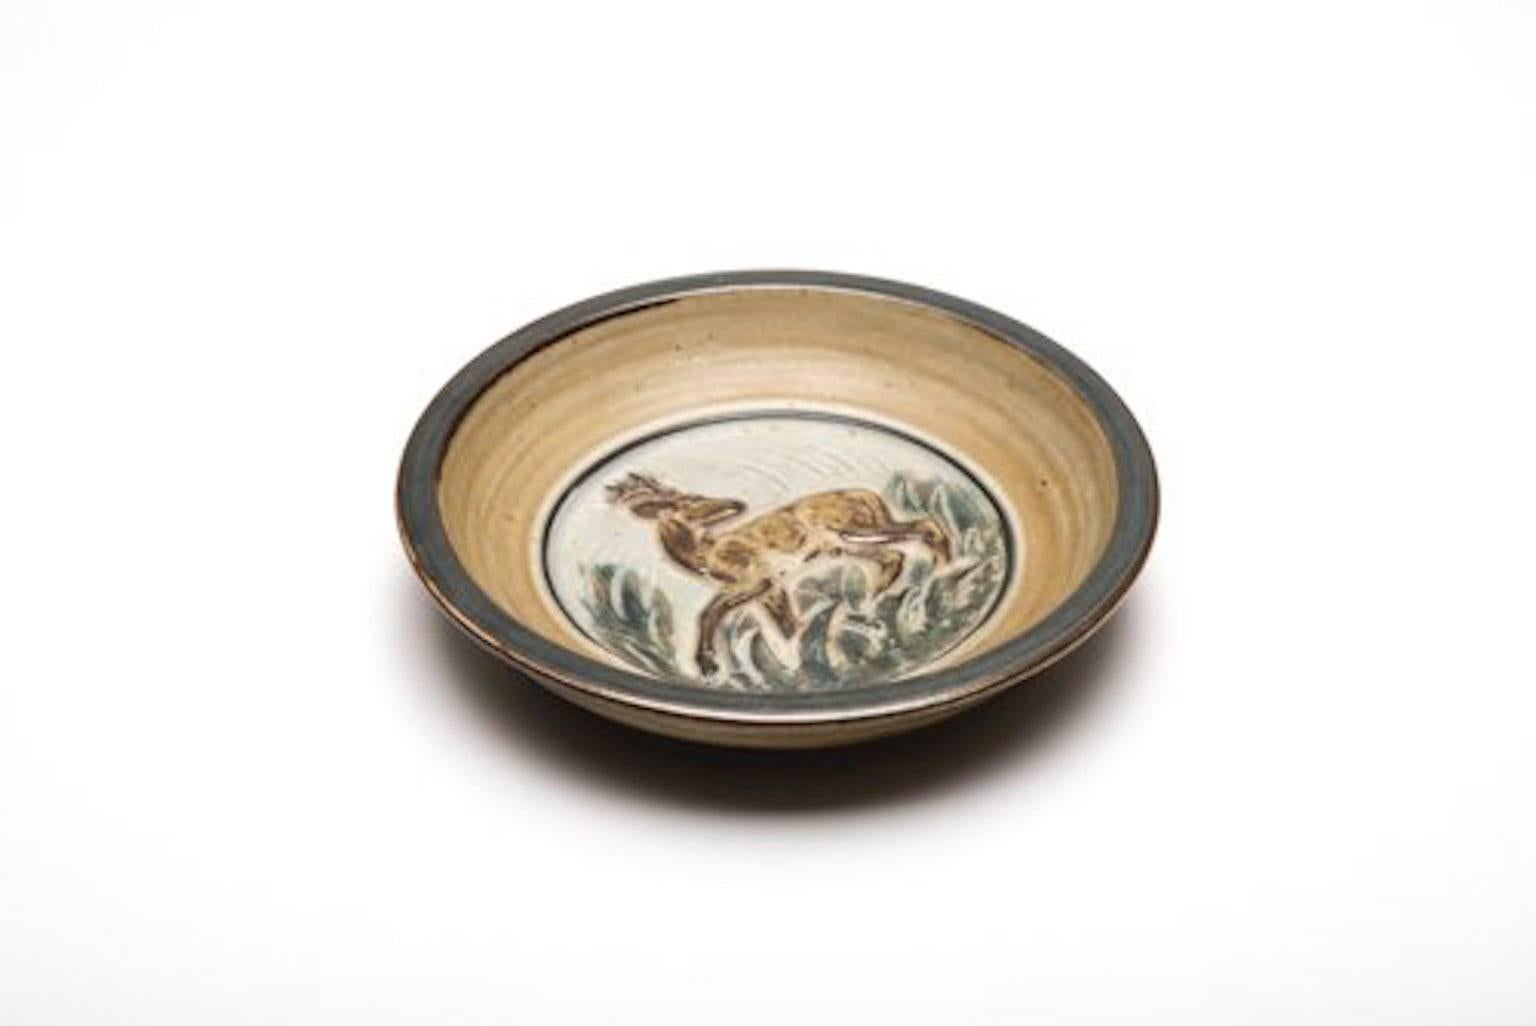 Beautiful Danish Modern ceramic stag bowl by Knud Kyhn for Royal Copenhagen.